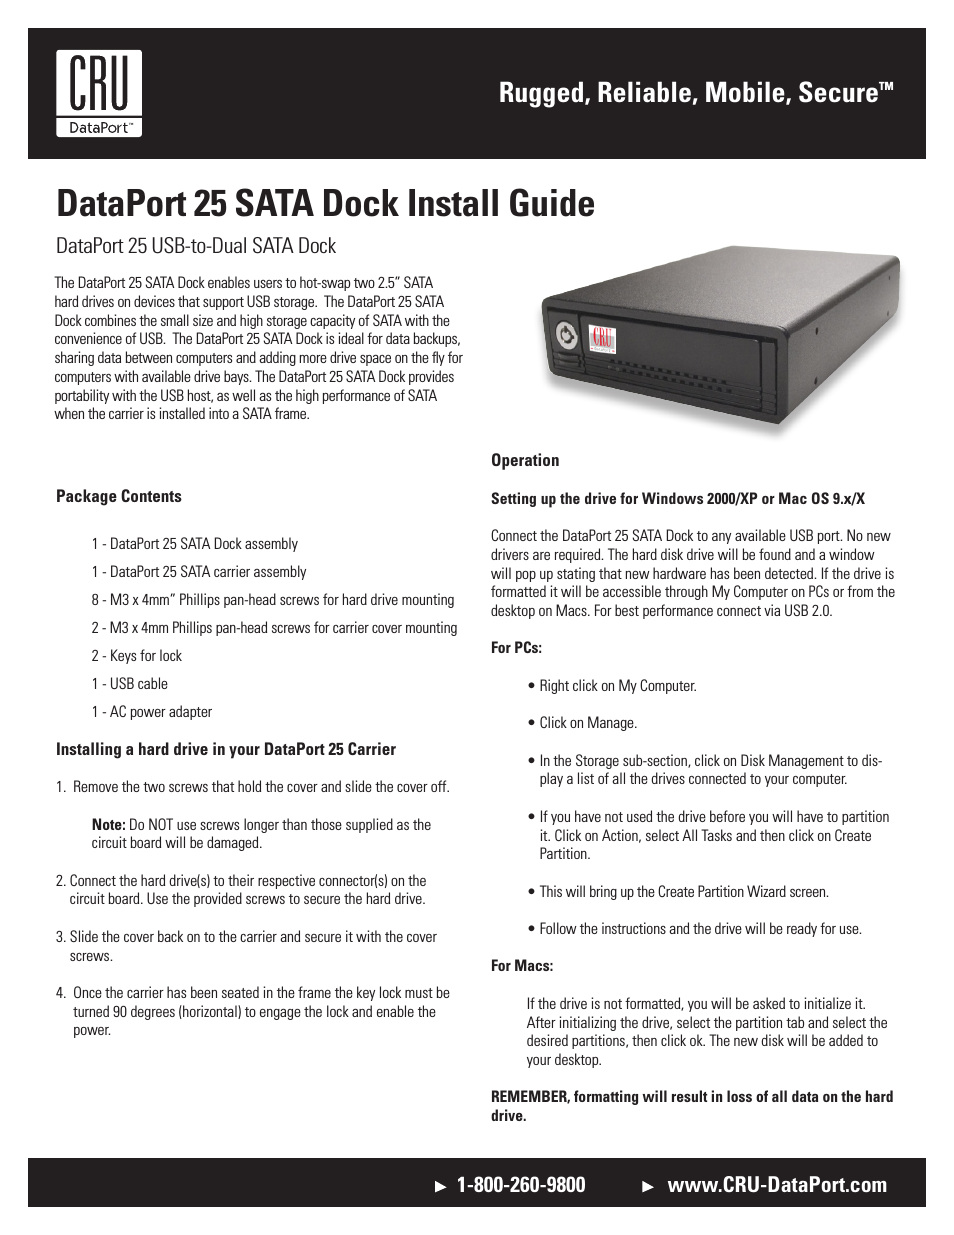 DataPort 25 SATA Rugged Dock USB 2.0